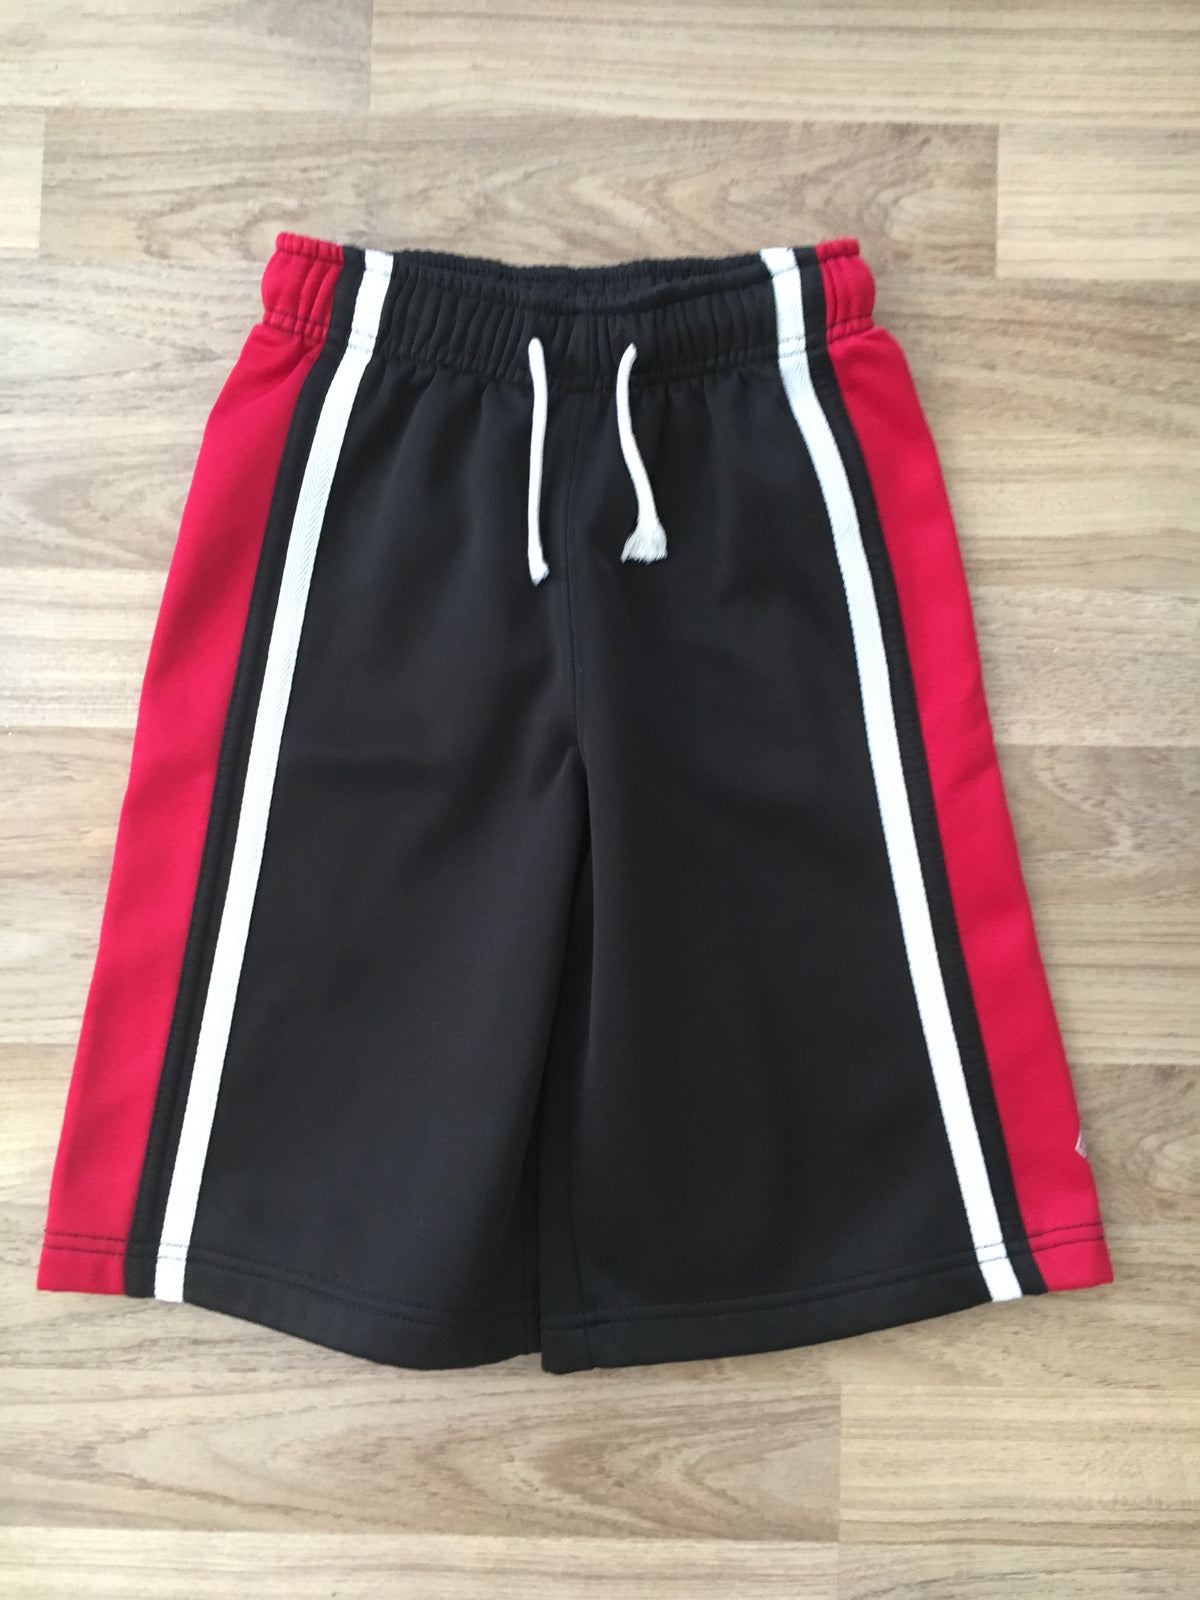 Shorts (Boys Size 4-5T)